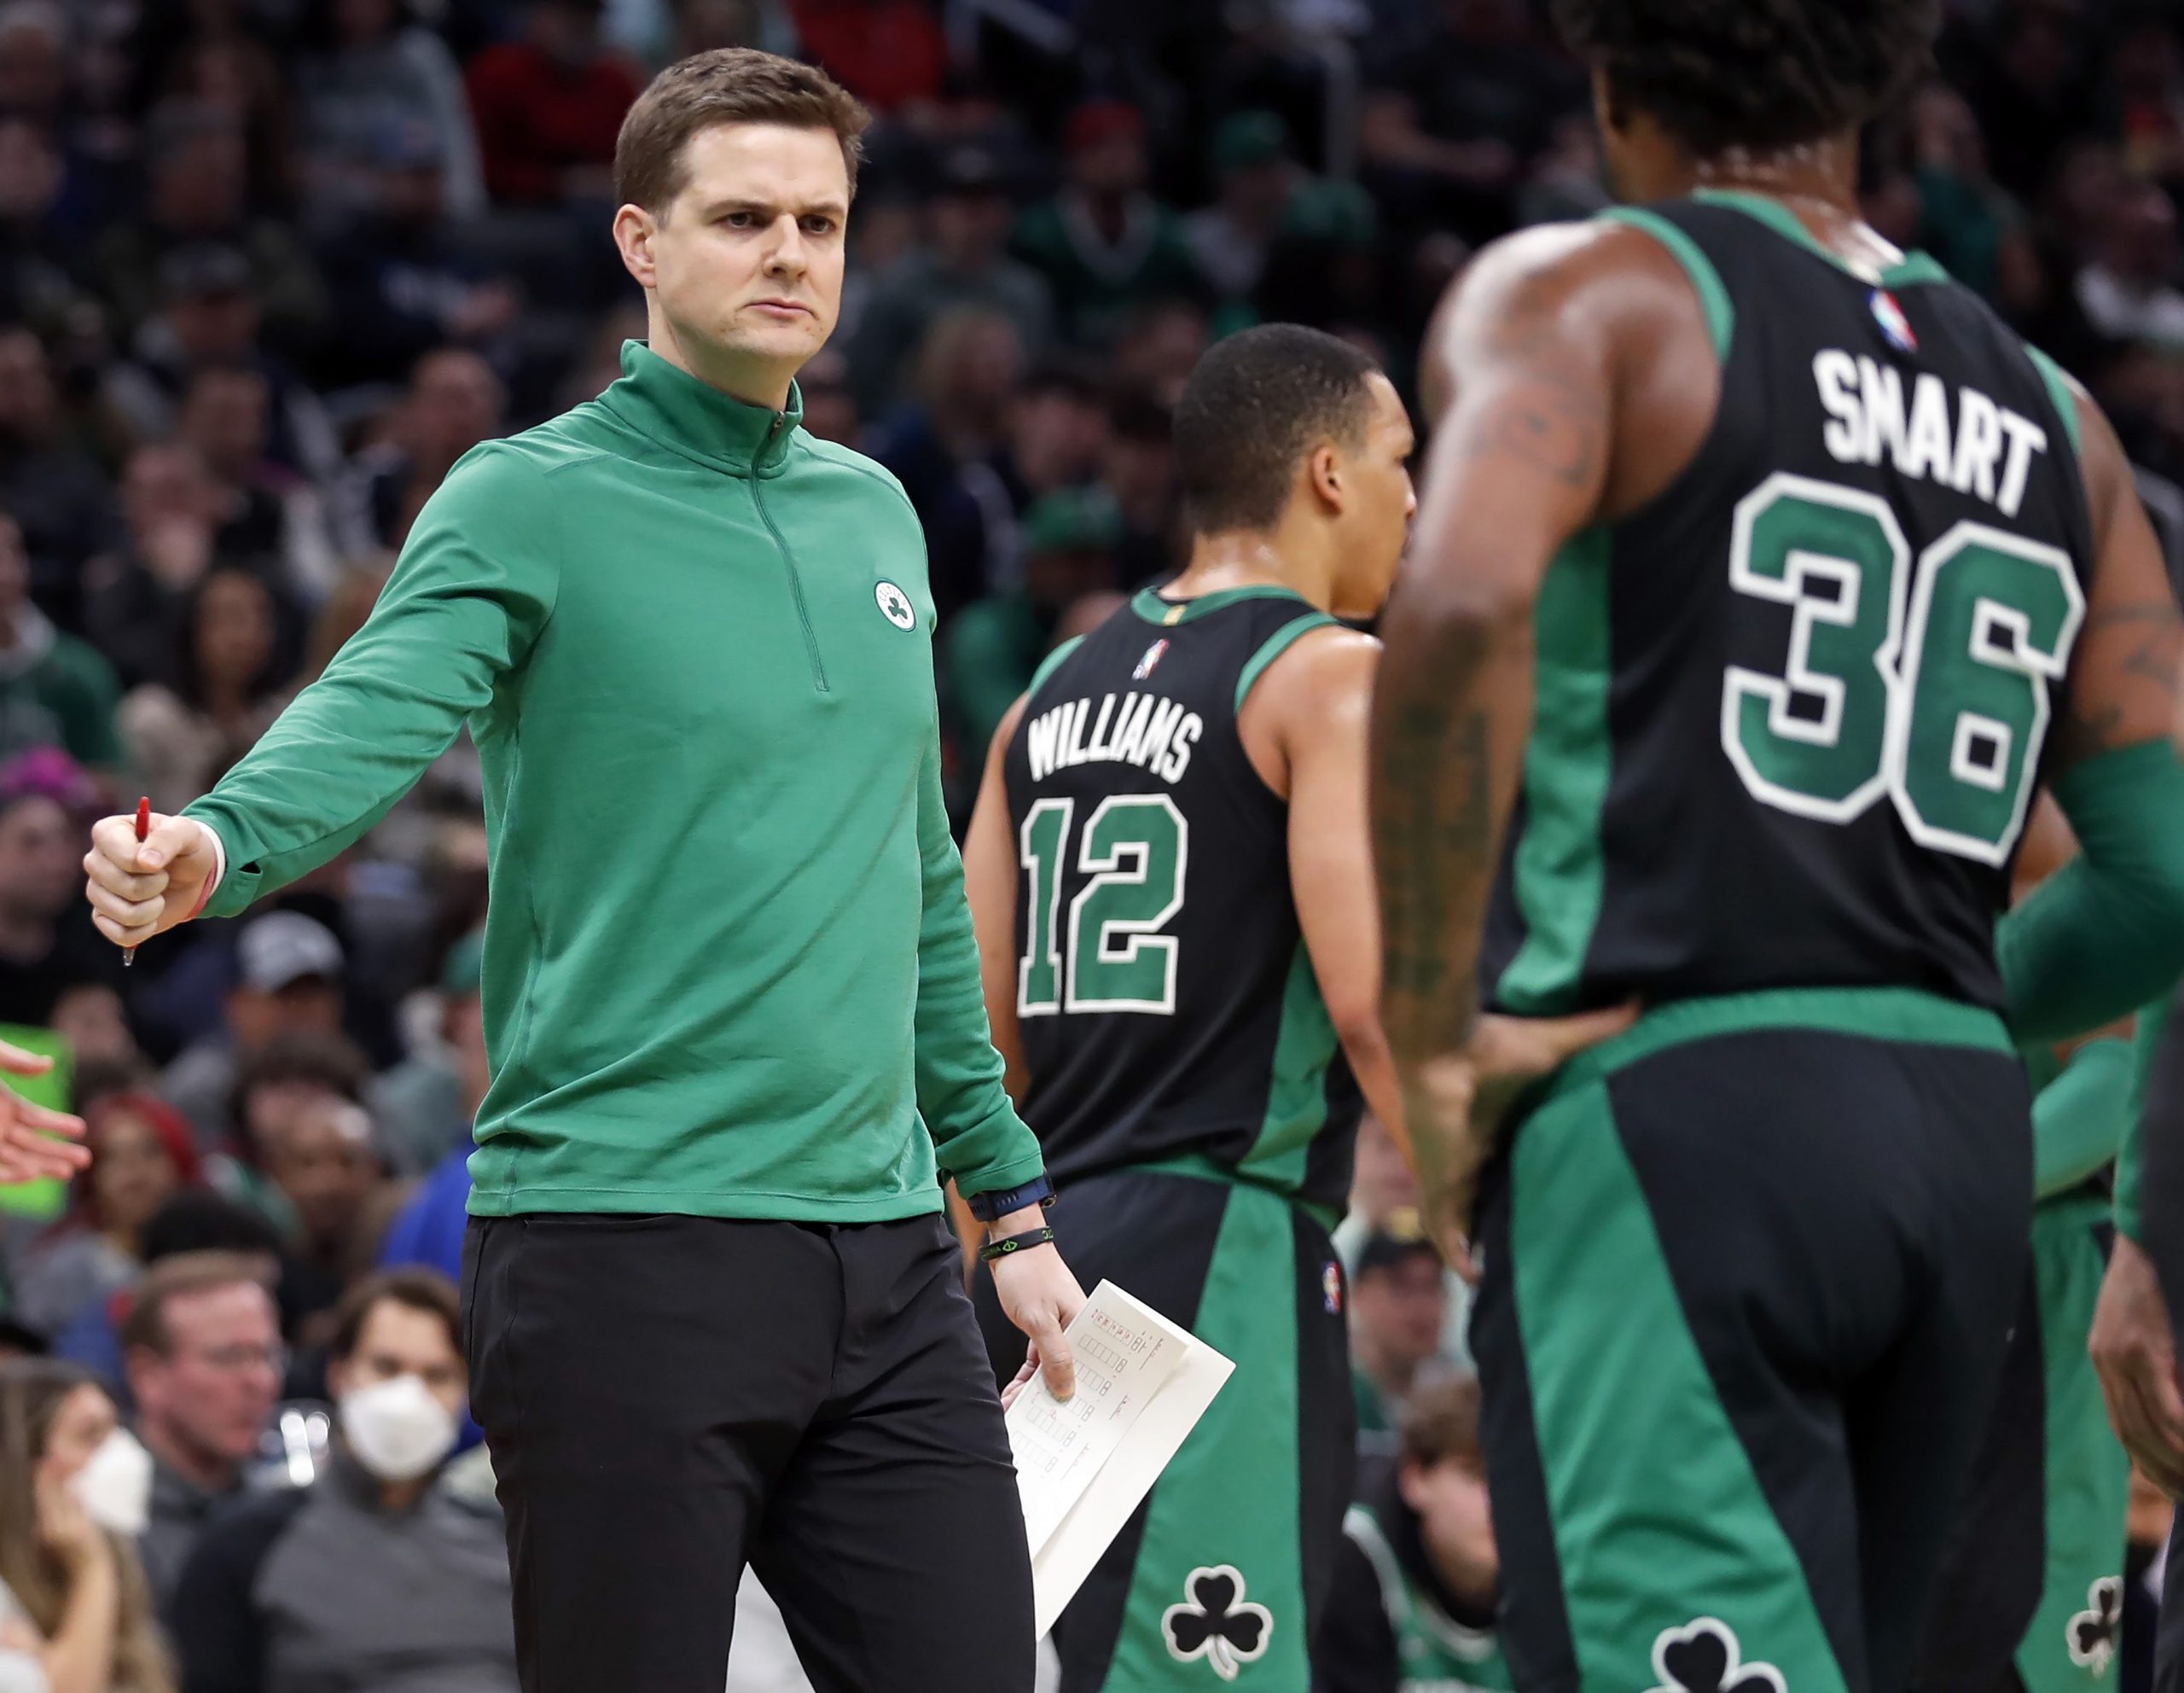 Will Hardy head coach Utah Jazz assistant coach Boston Celtics youngest